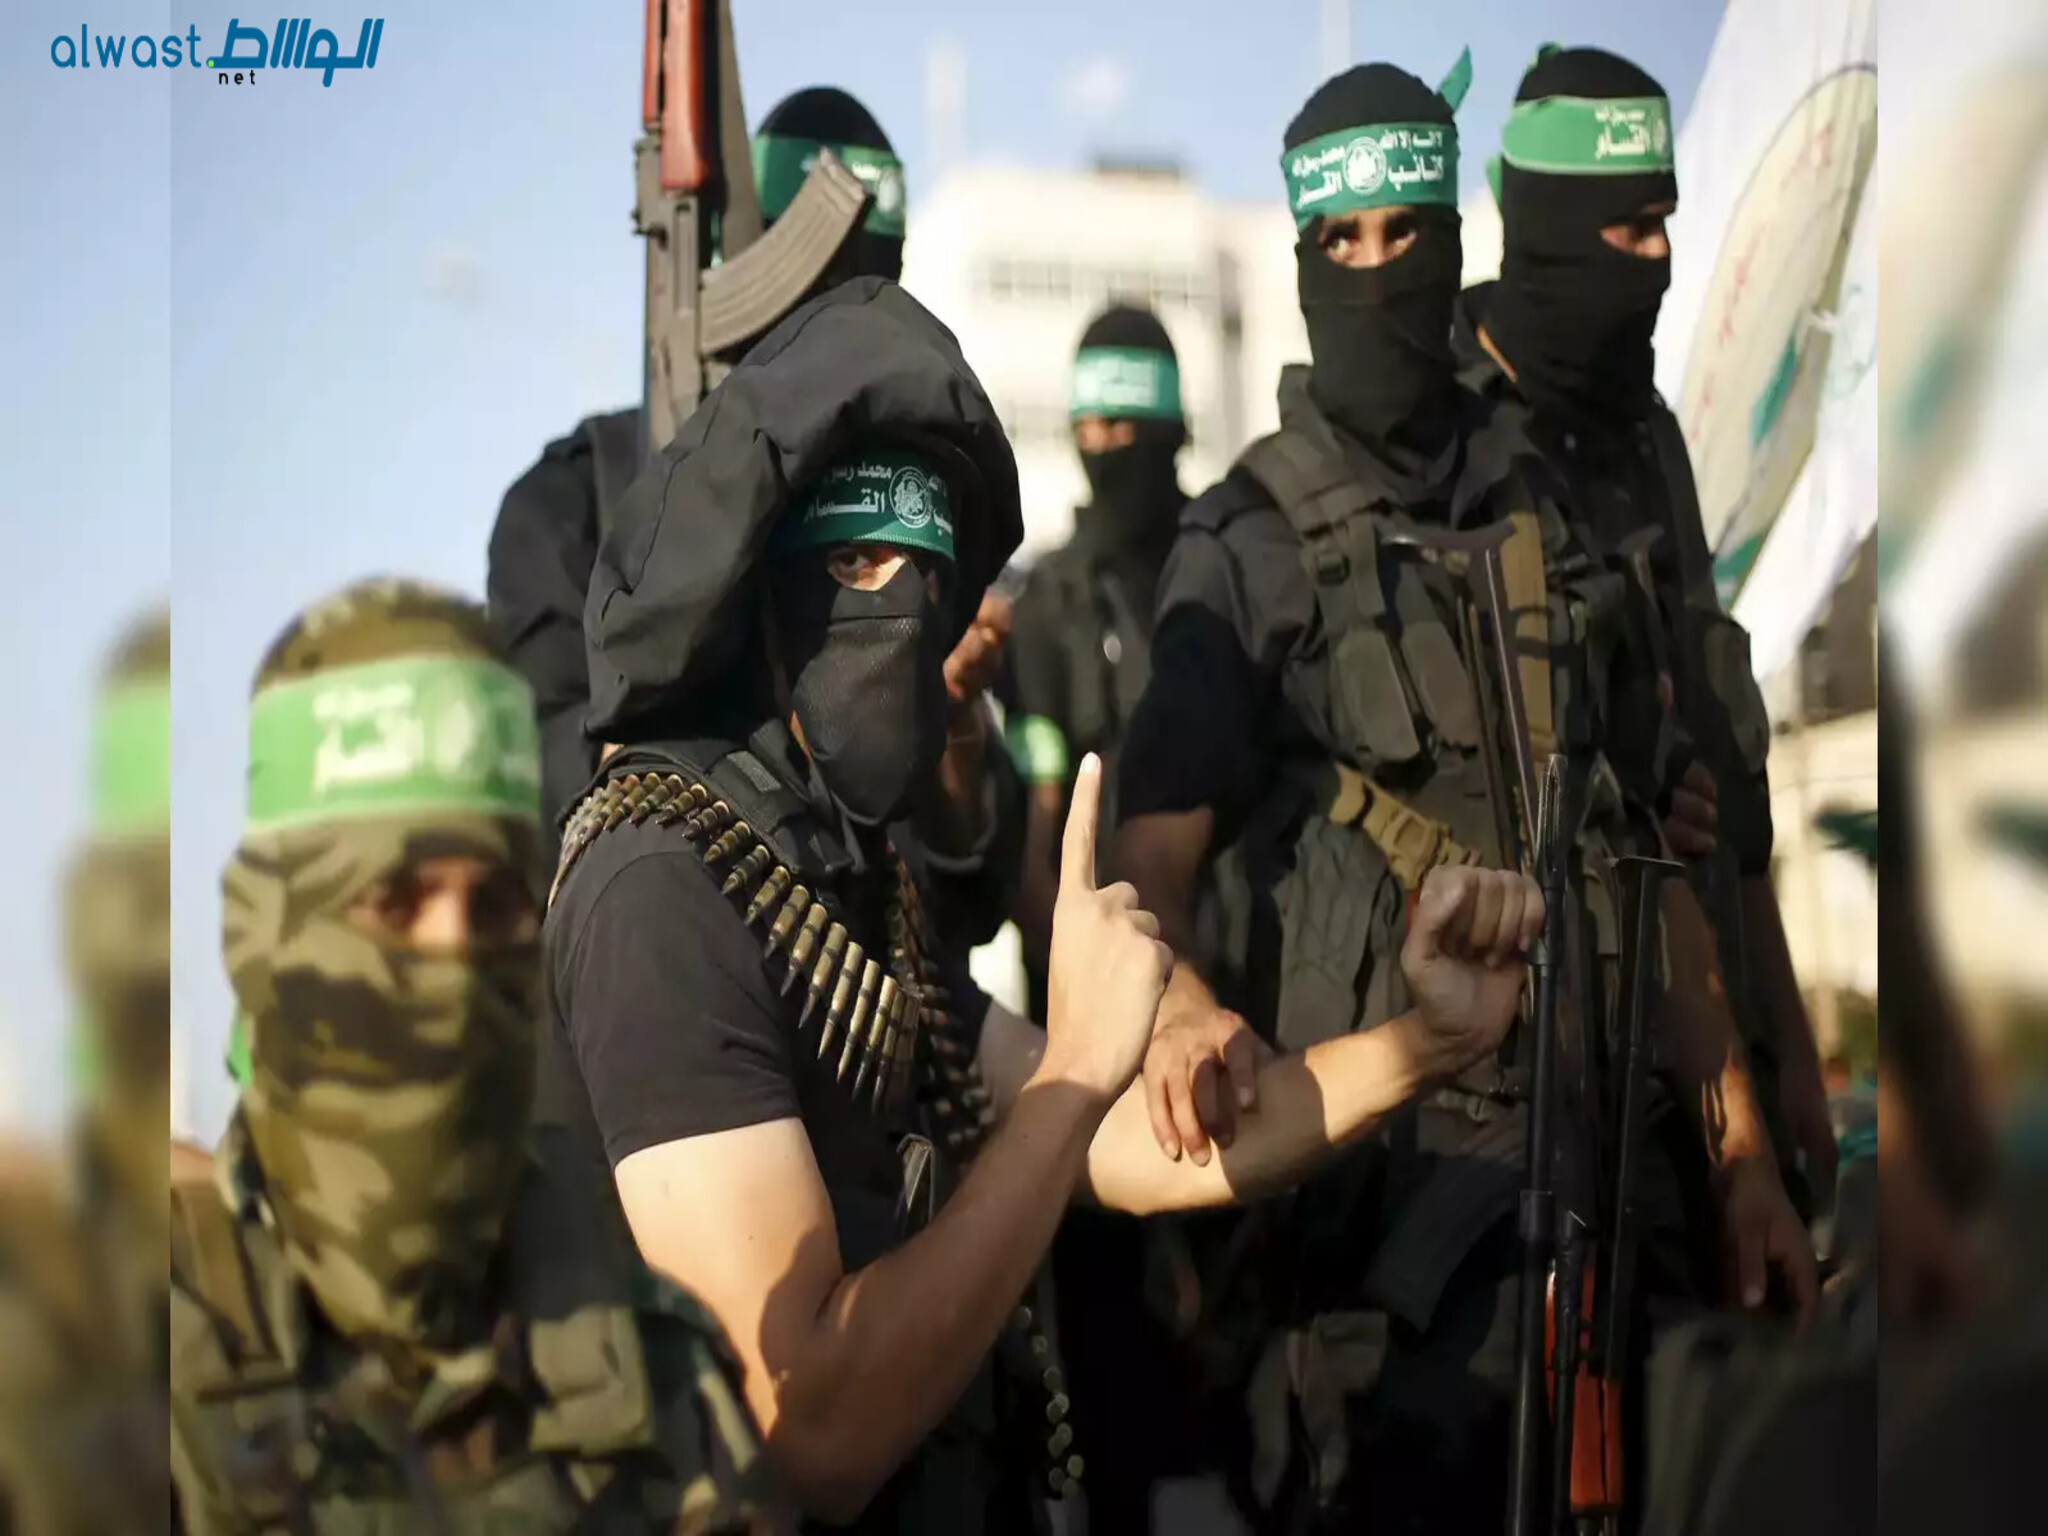 Israel-Gaza crisis: Hamas releases new hostage video